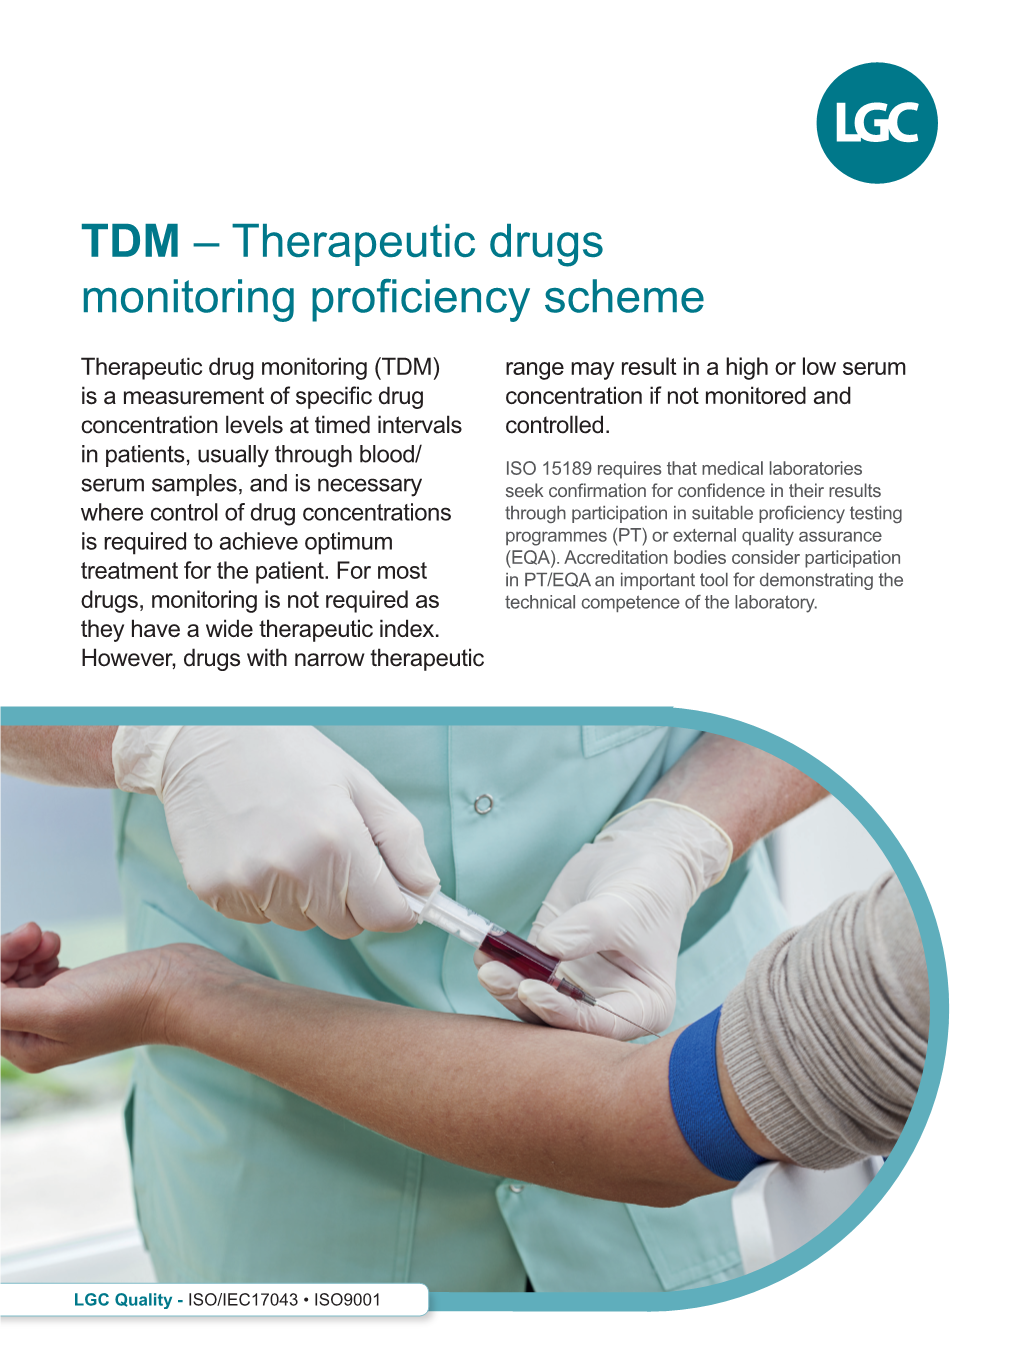 TDM – Therapeutic Drugs Monitoring Proficiency Scheme